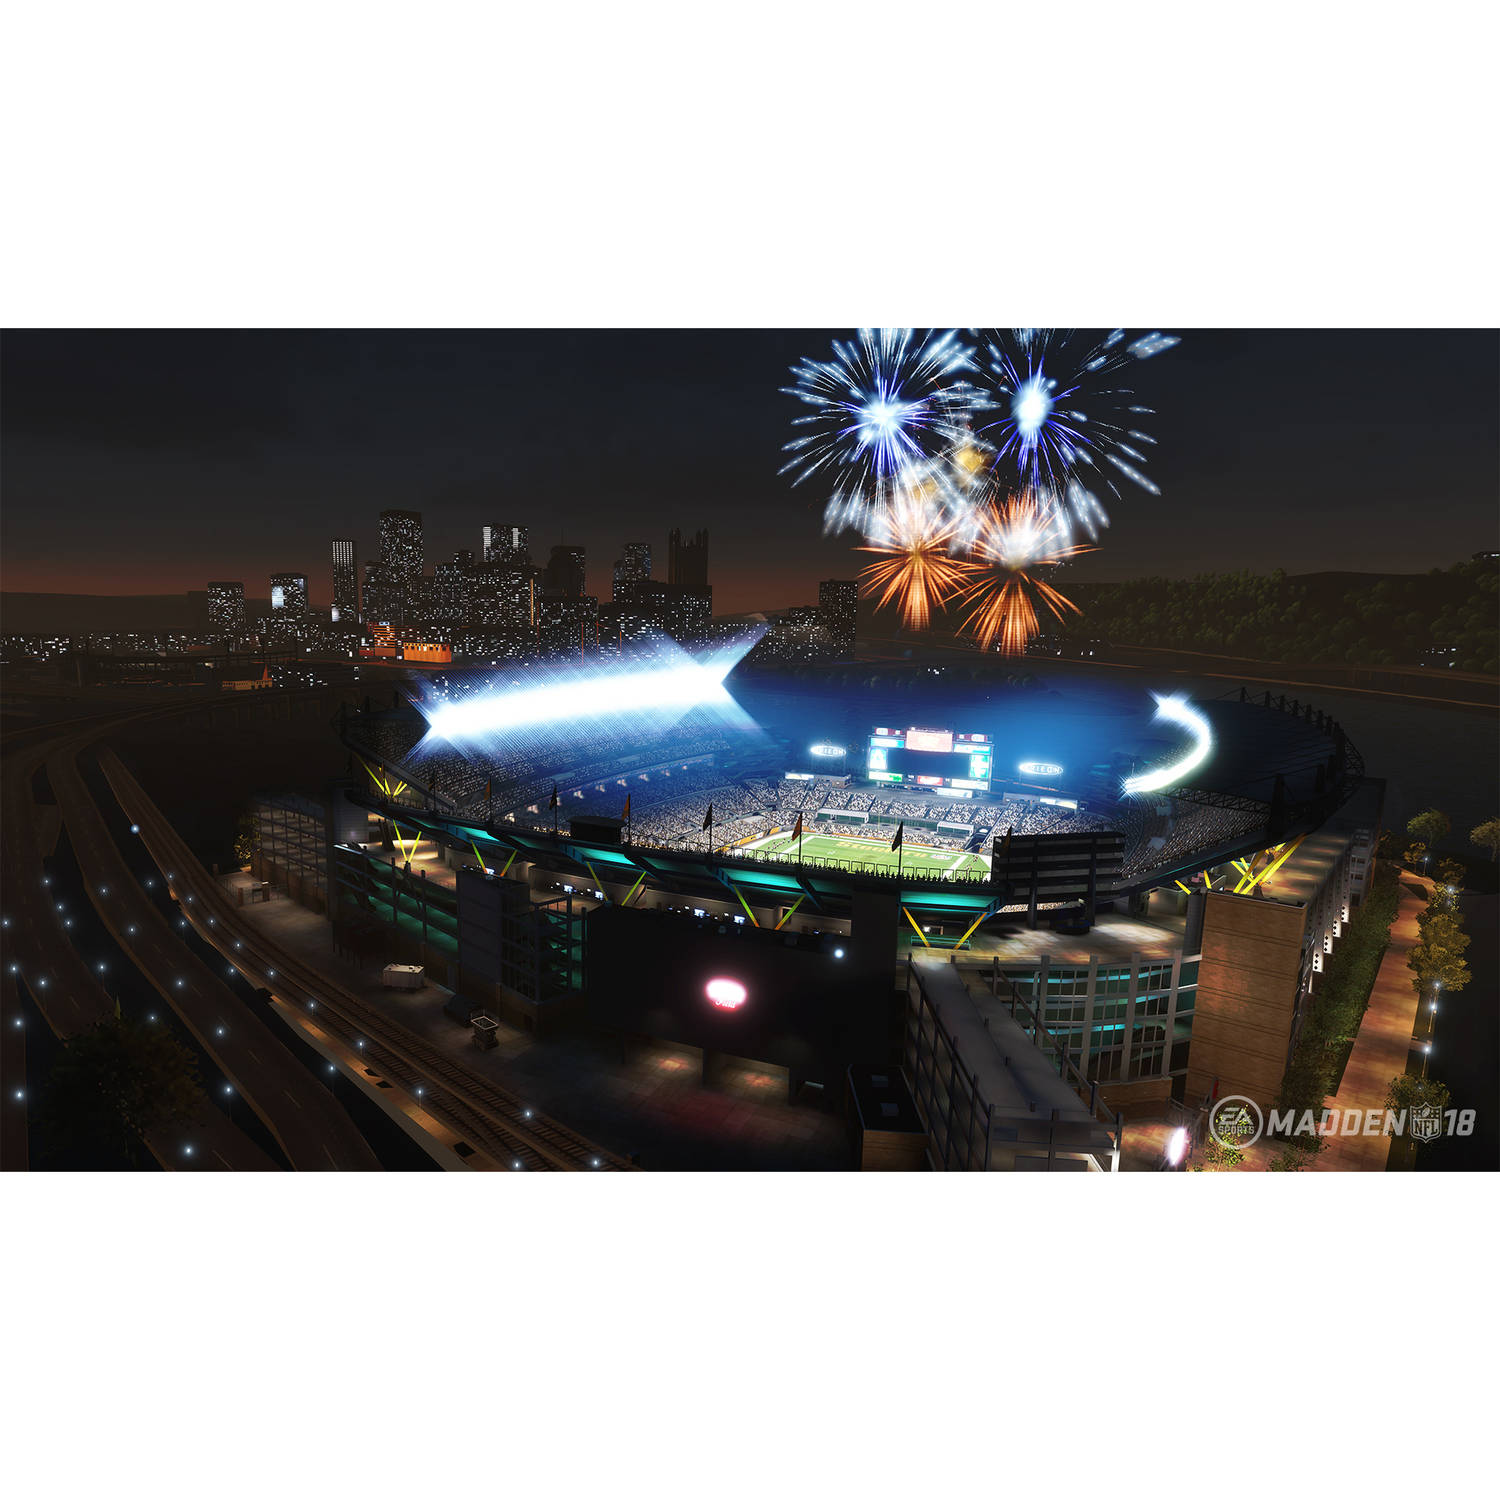 Madden NFL 18, Electronic Arts, Xbox One, 014633370034 - image 3 of 4